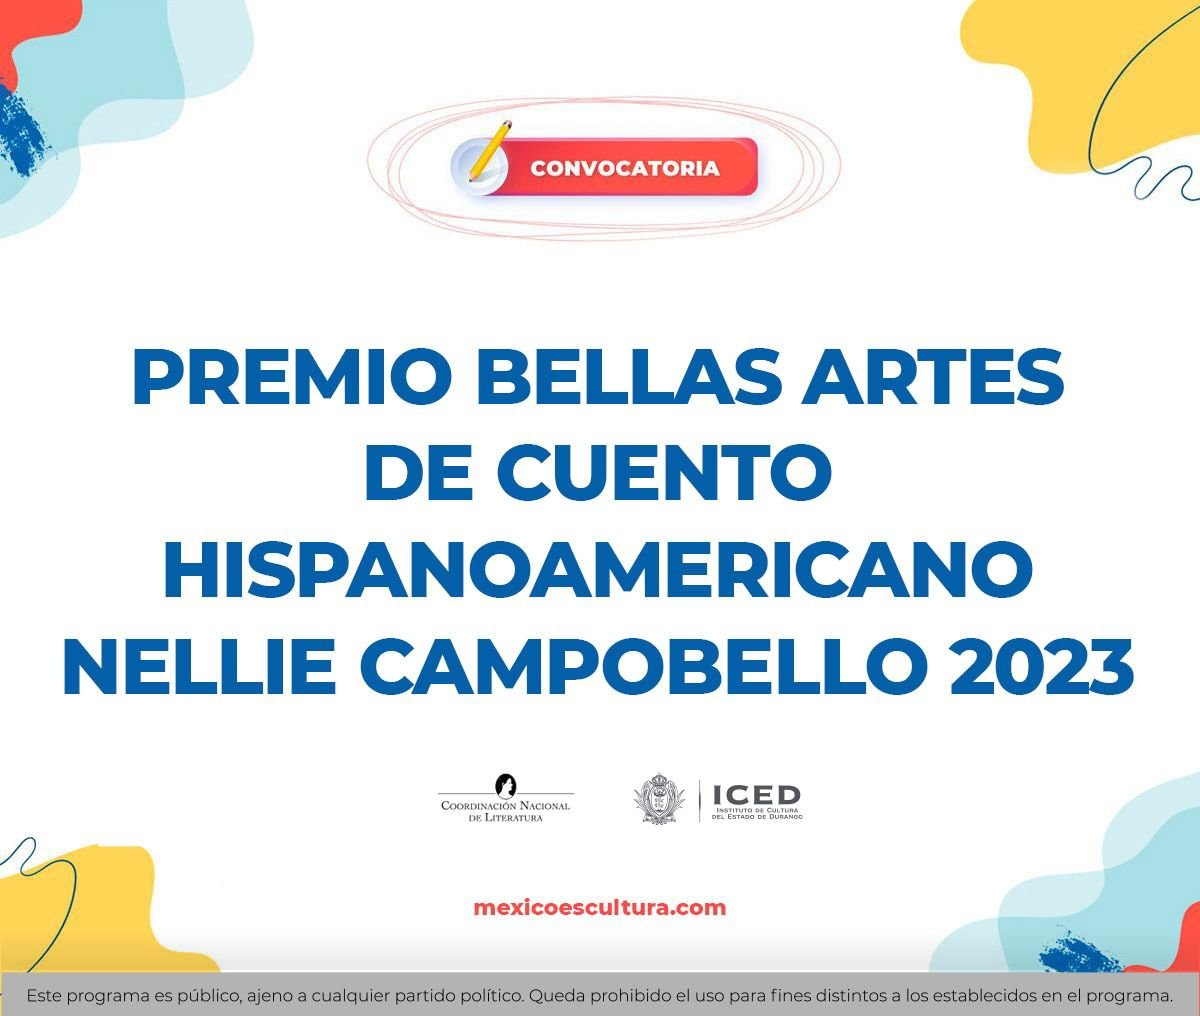 Convocatoria Premio Bellas Artes de Cuento Hispanoamericano,